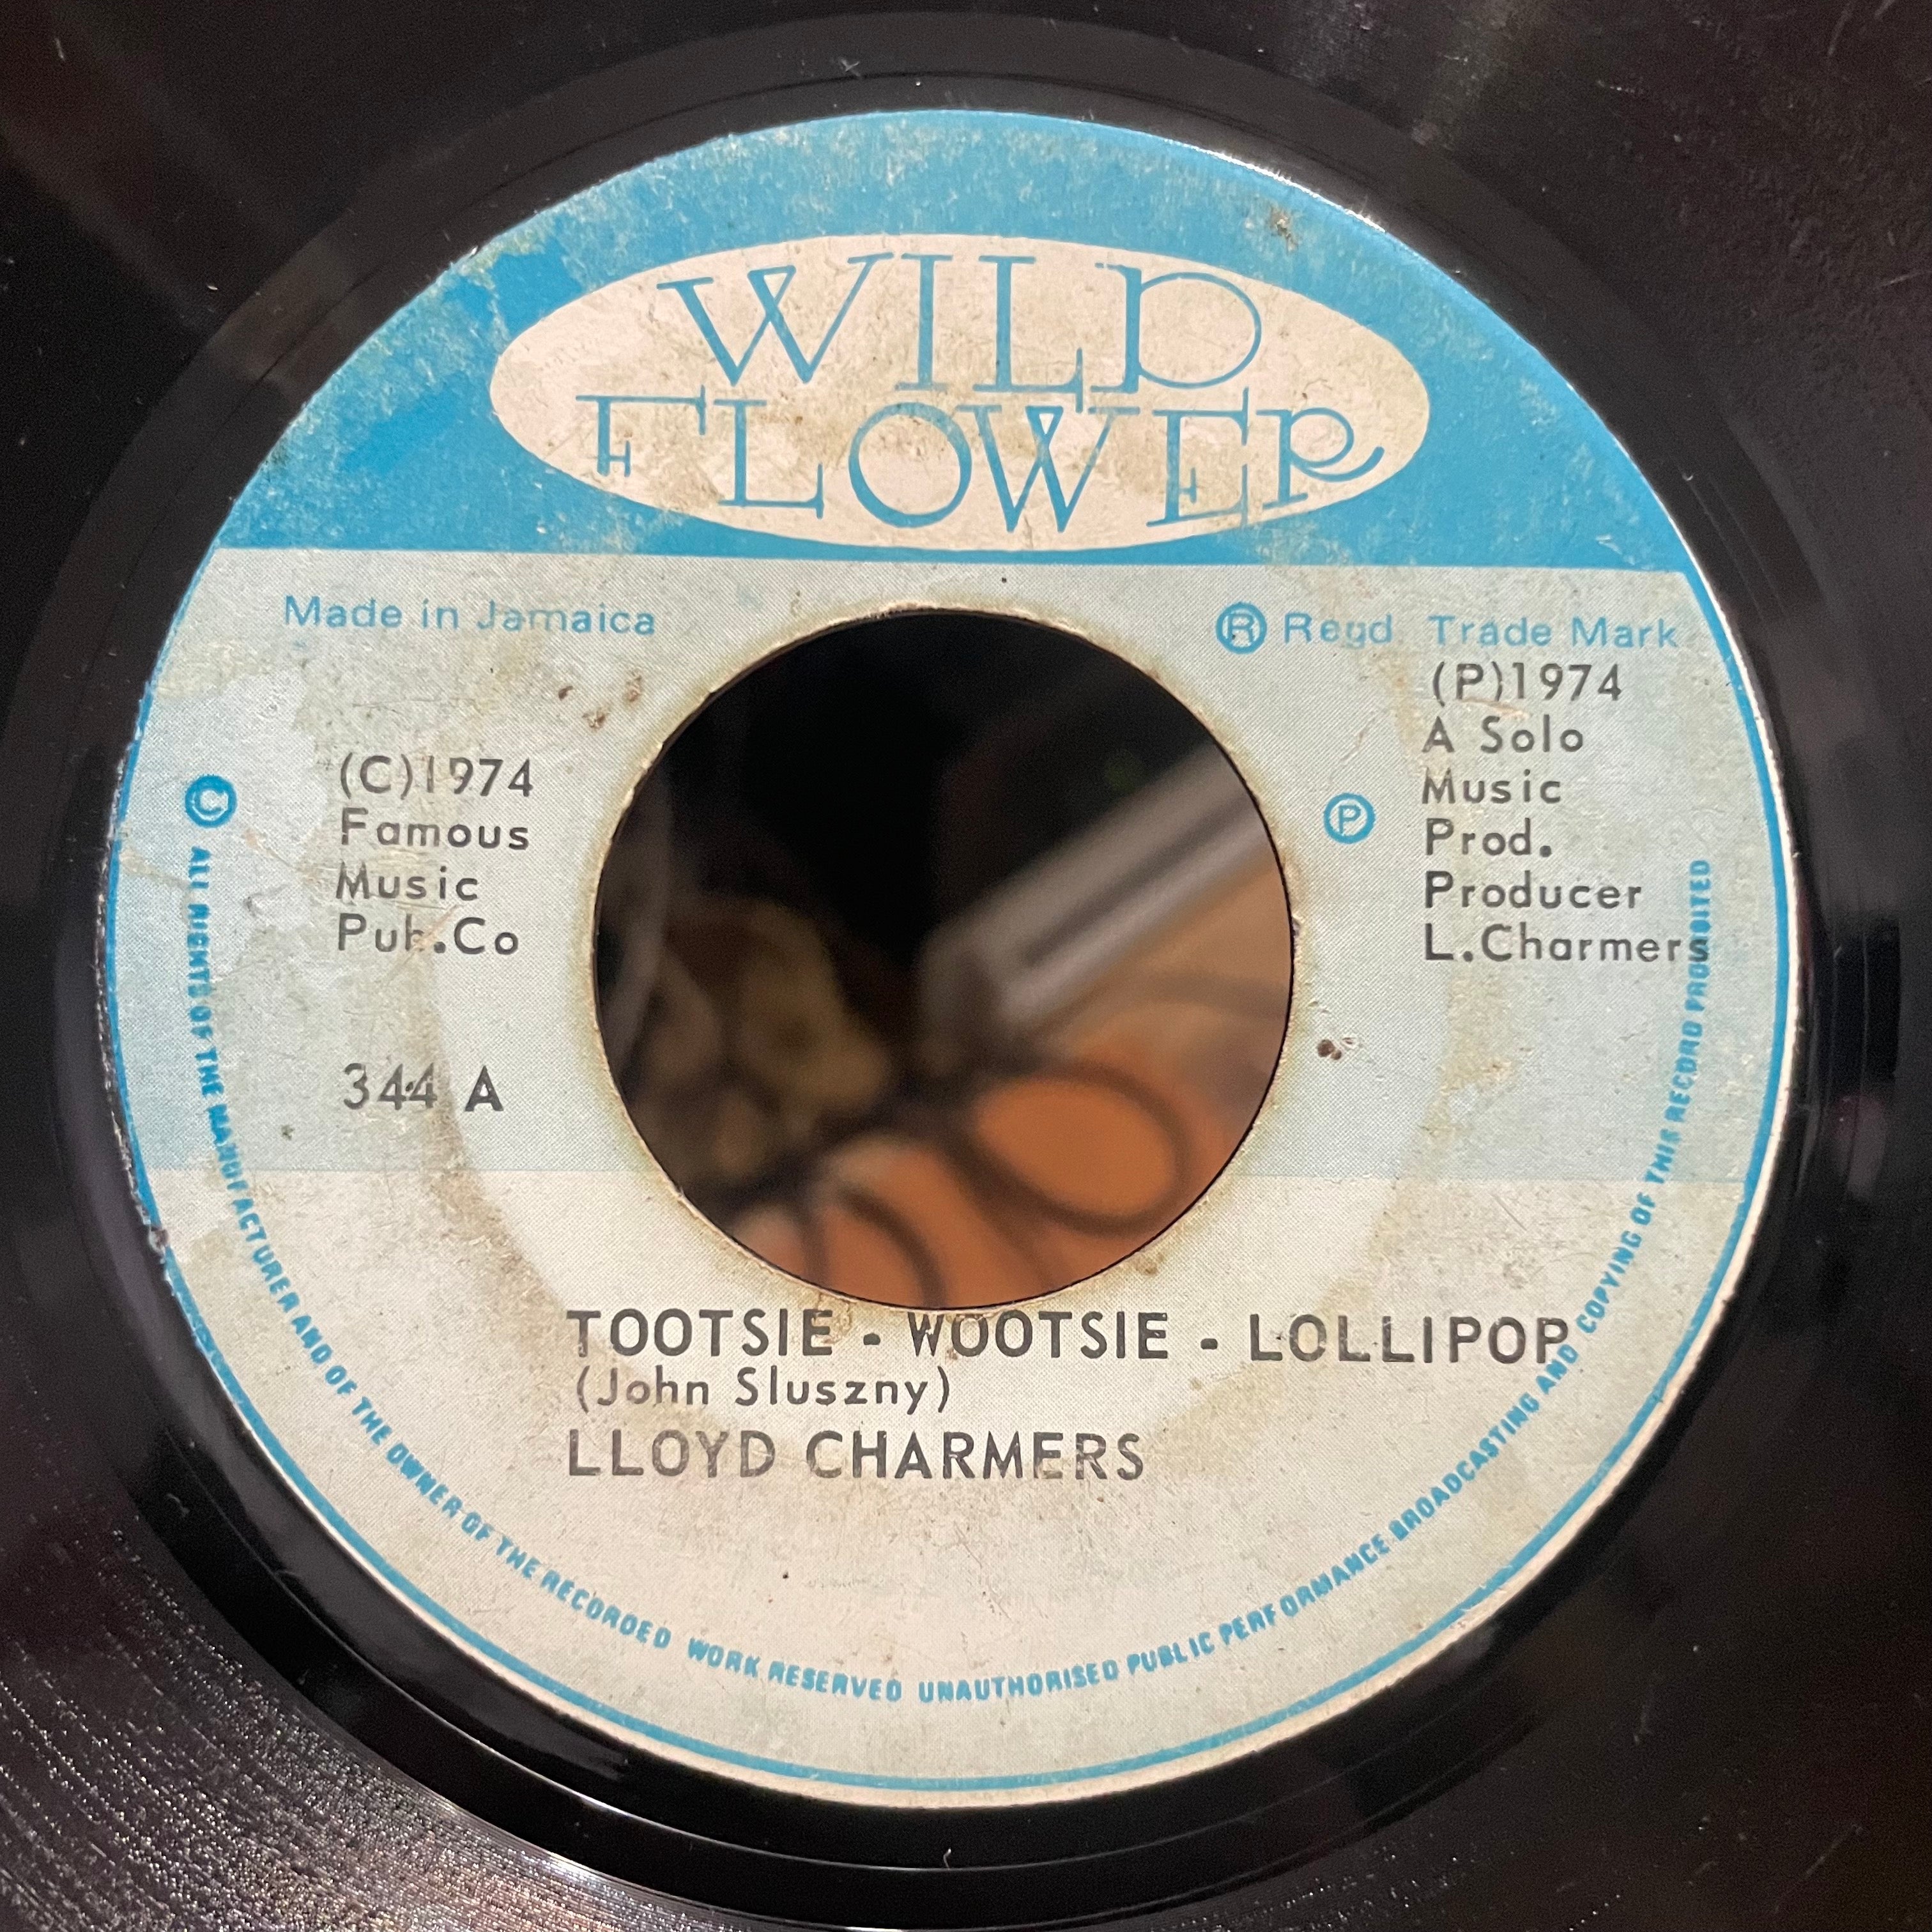 LLOYD CHARMERS [Tootsie Wootise Lollipop]